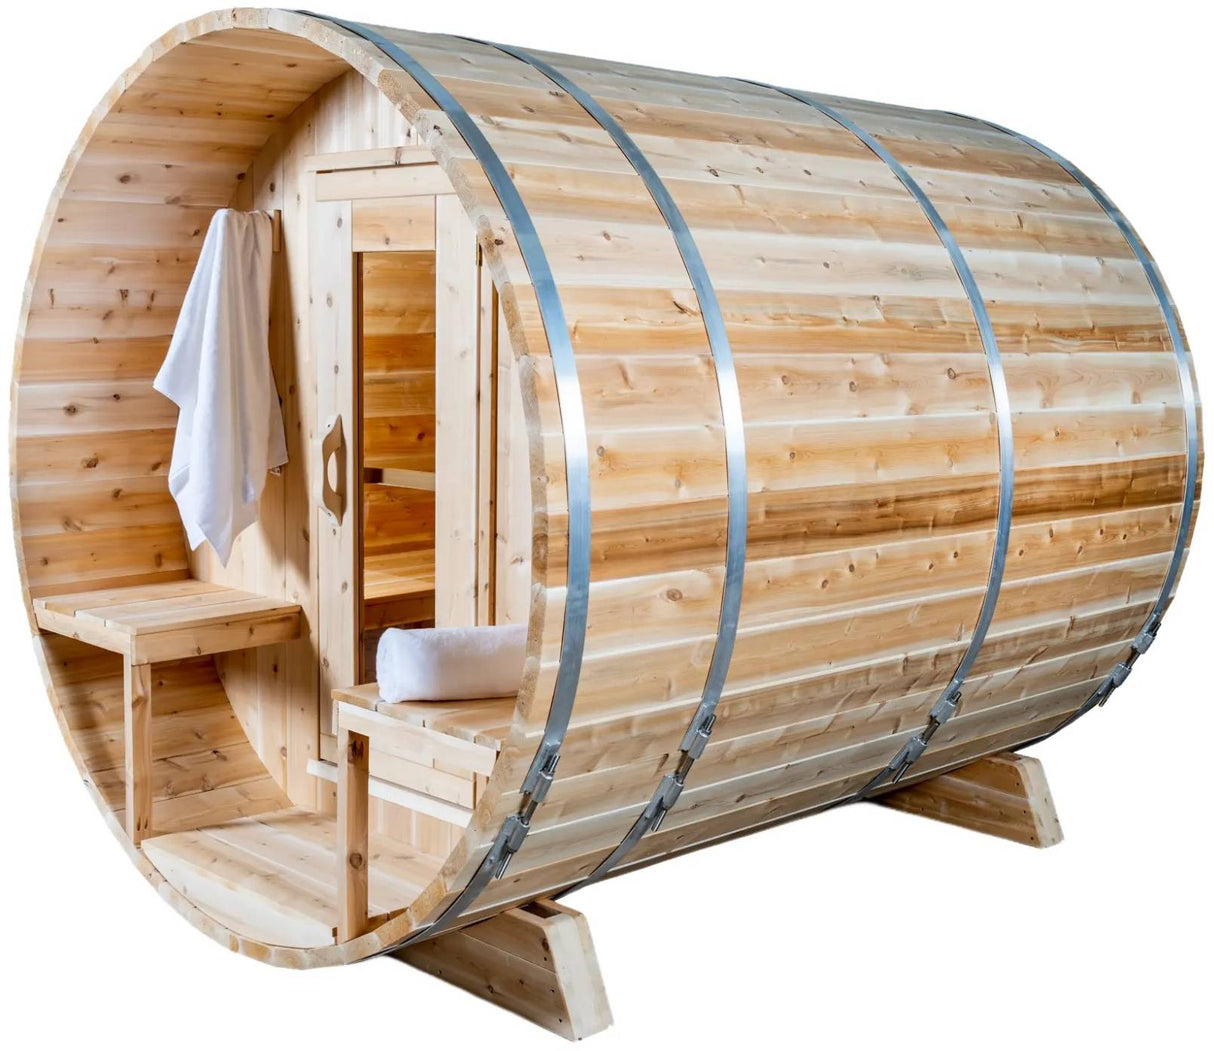 ZiahCare's Dundalk Serenity 4 Person Outdoor Barrel Sauna Kit Mockup Image 3